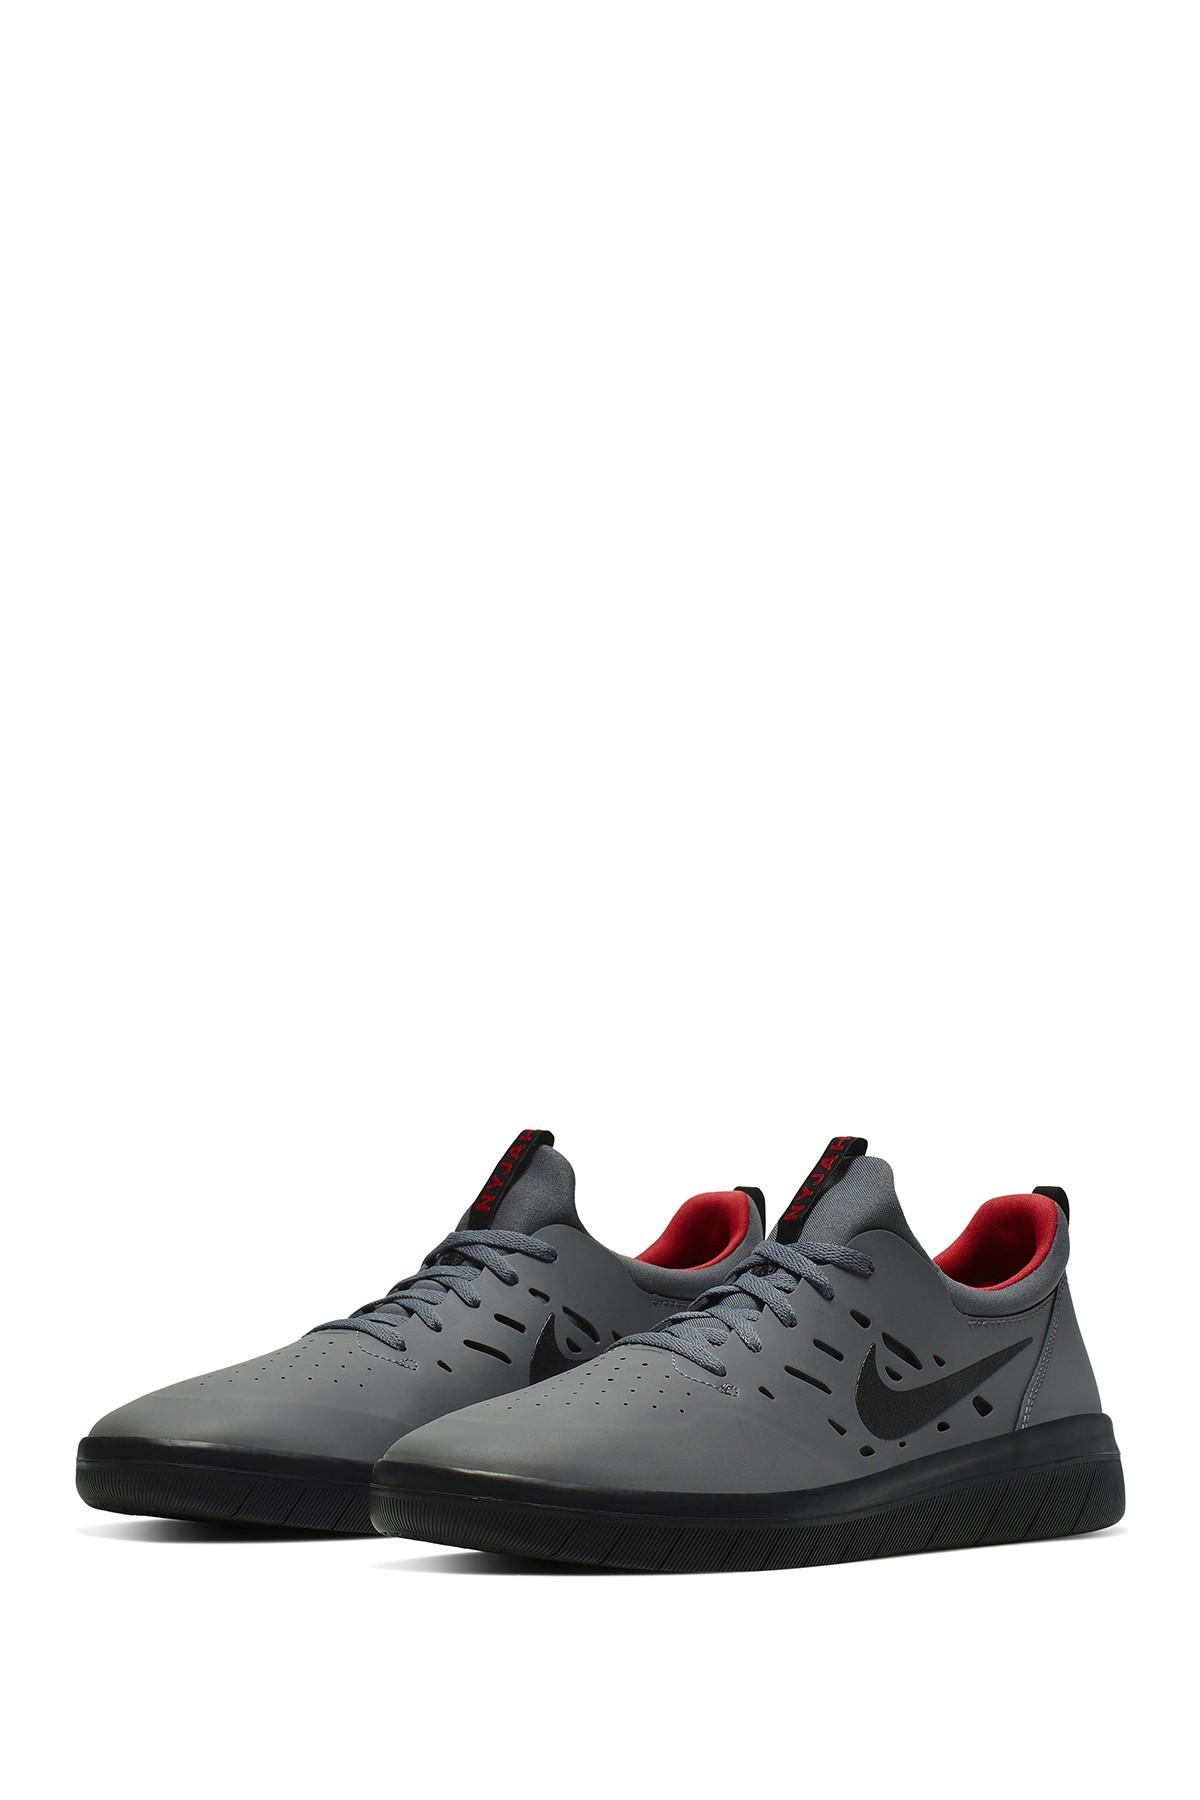 Nike Sb Nyjah Free Skate Shoe in Dark Grey/Black (Gray) for Men | Lyst